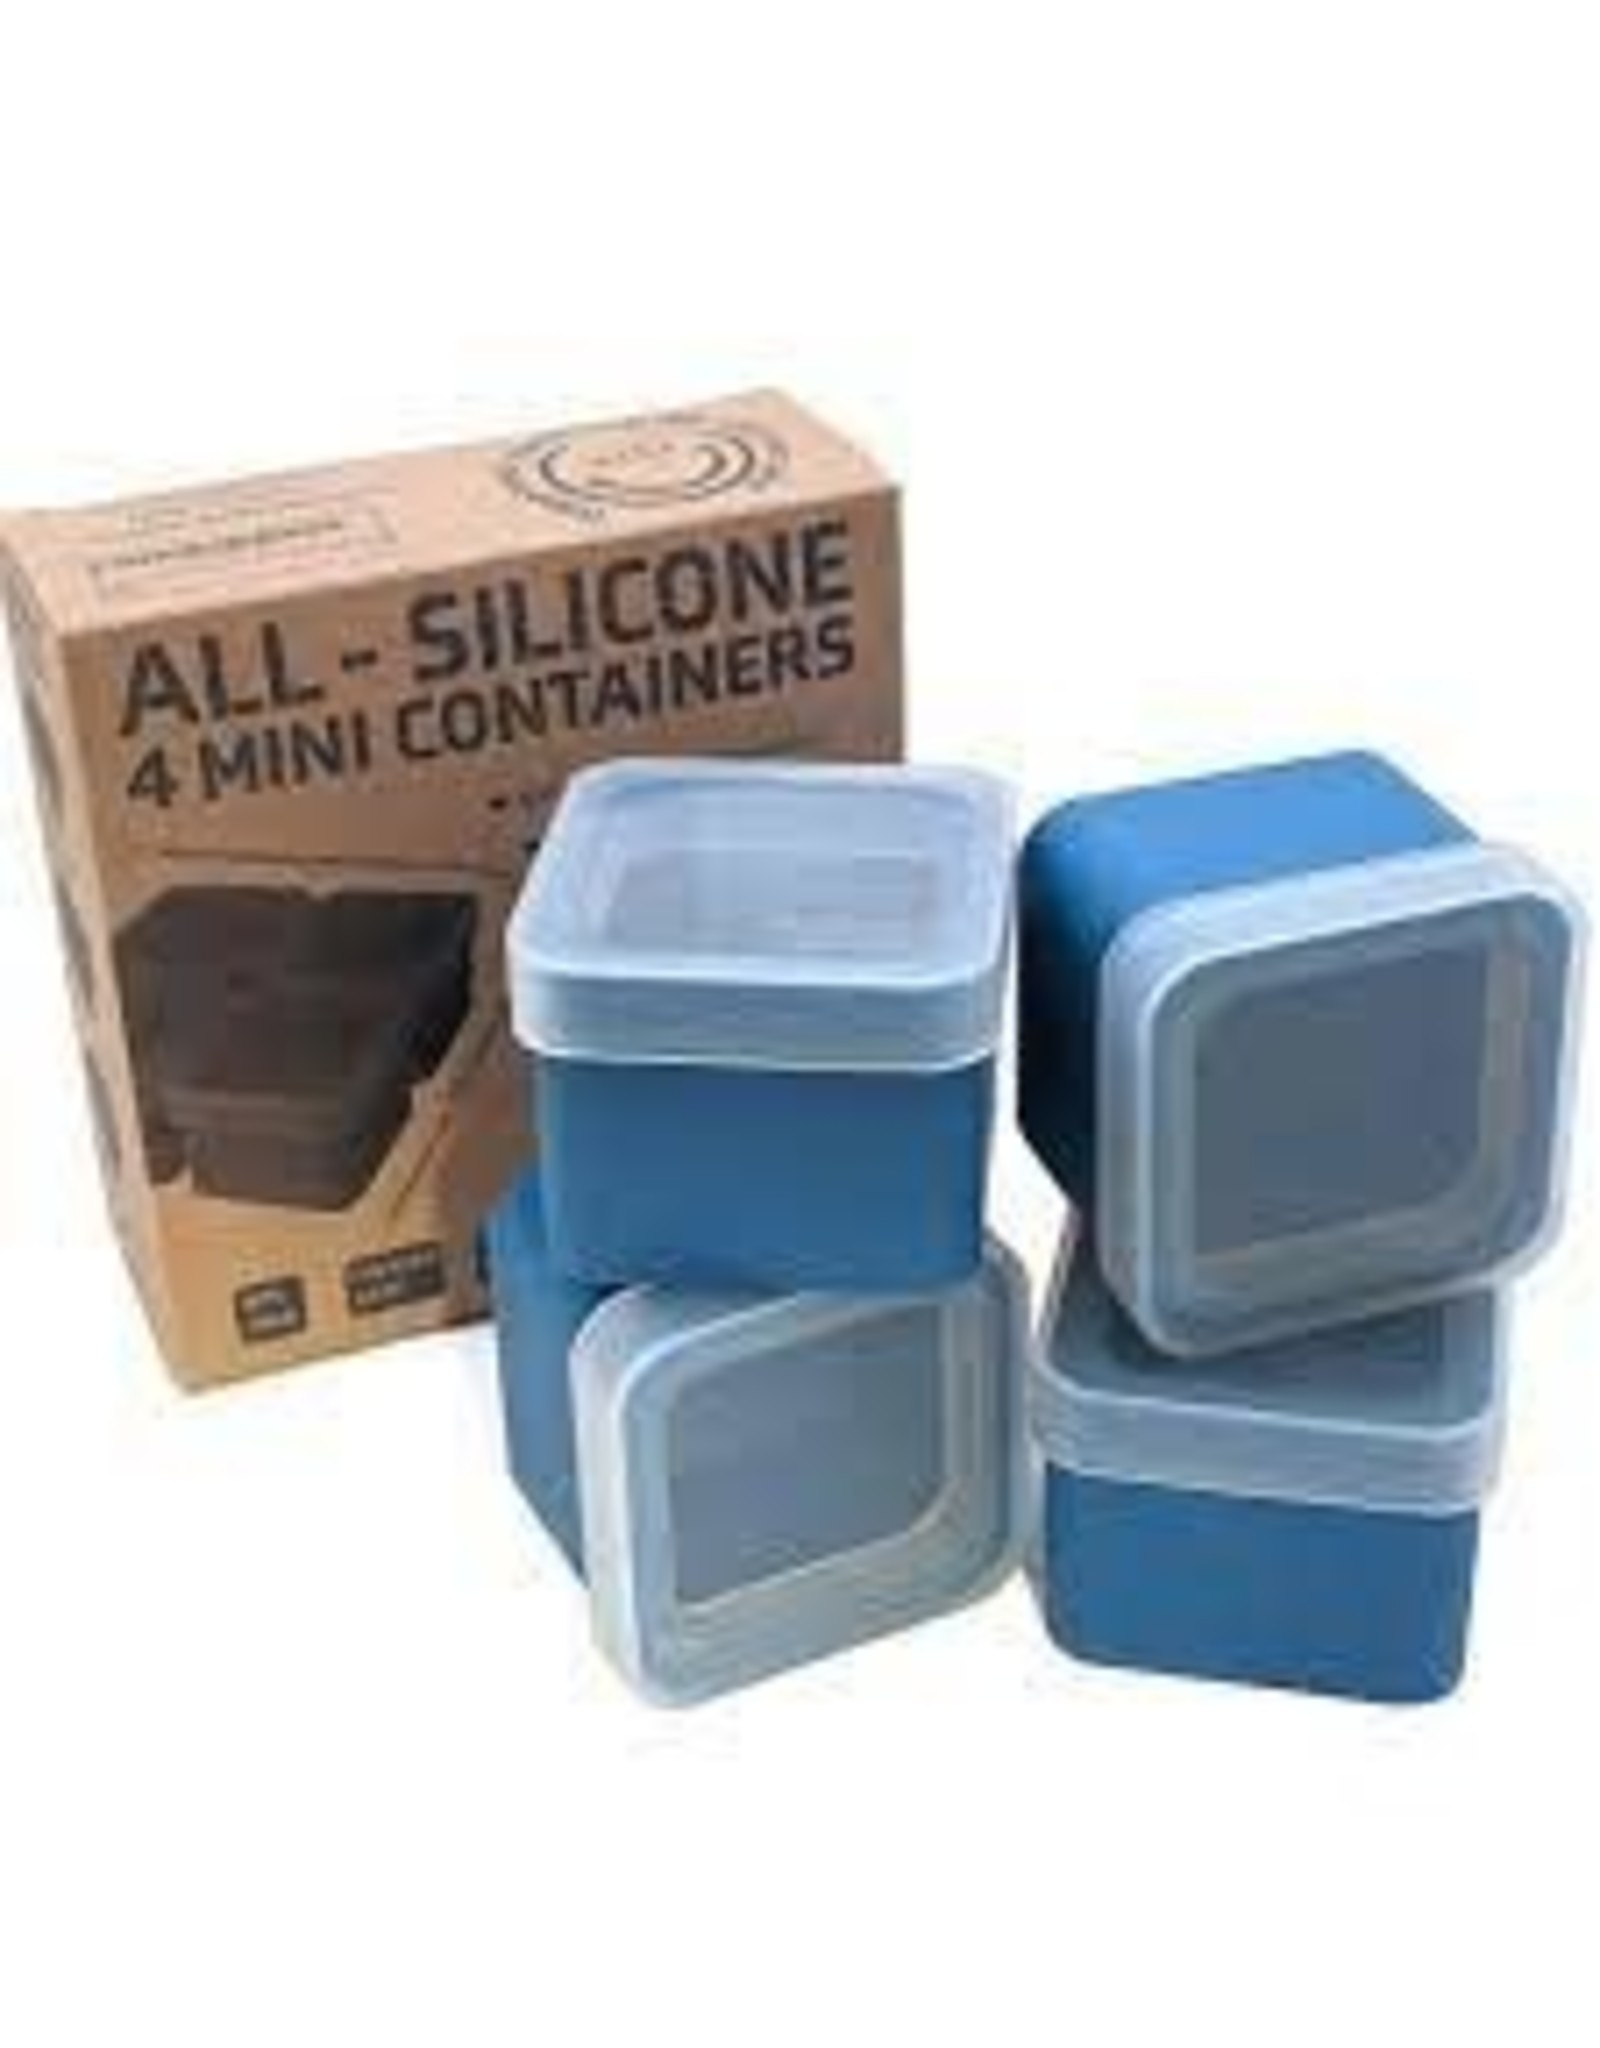 All Silicone 4 Mini Containers Blue